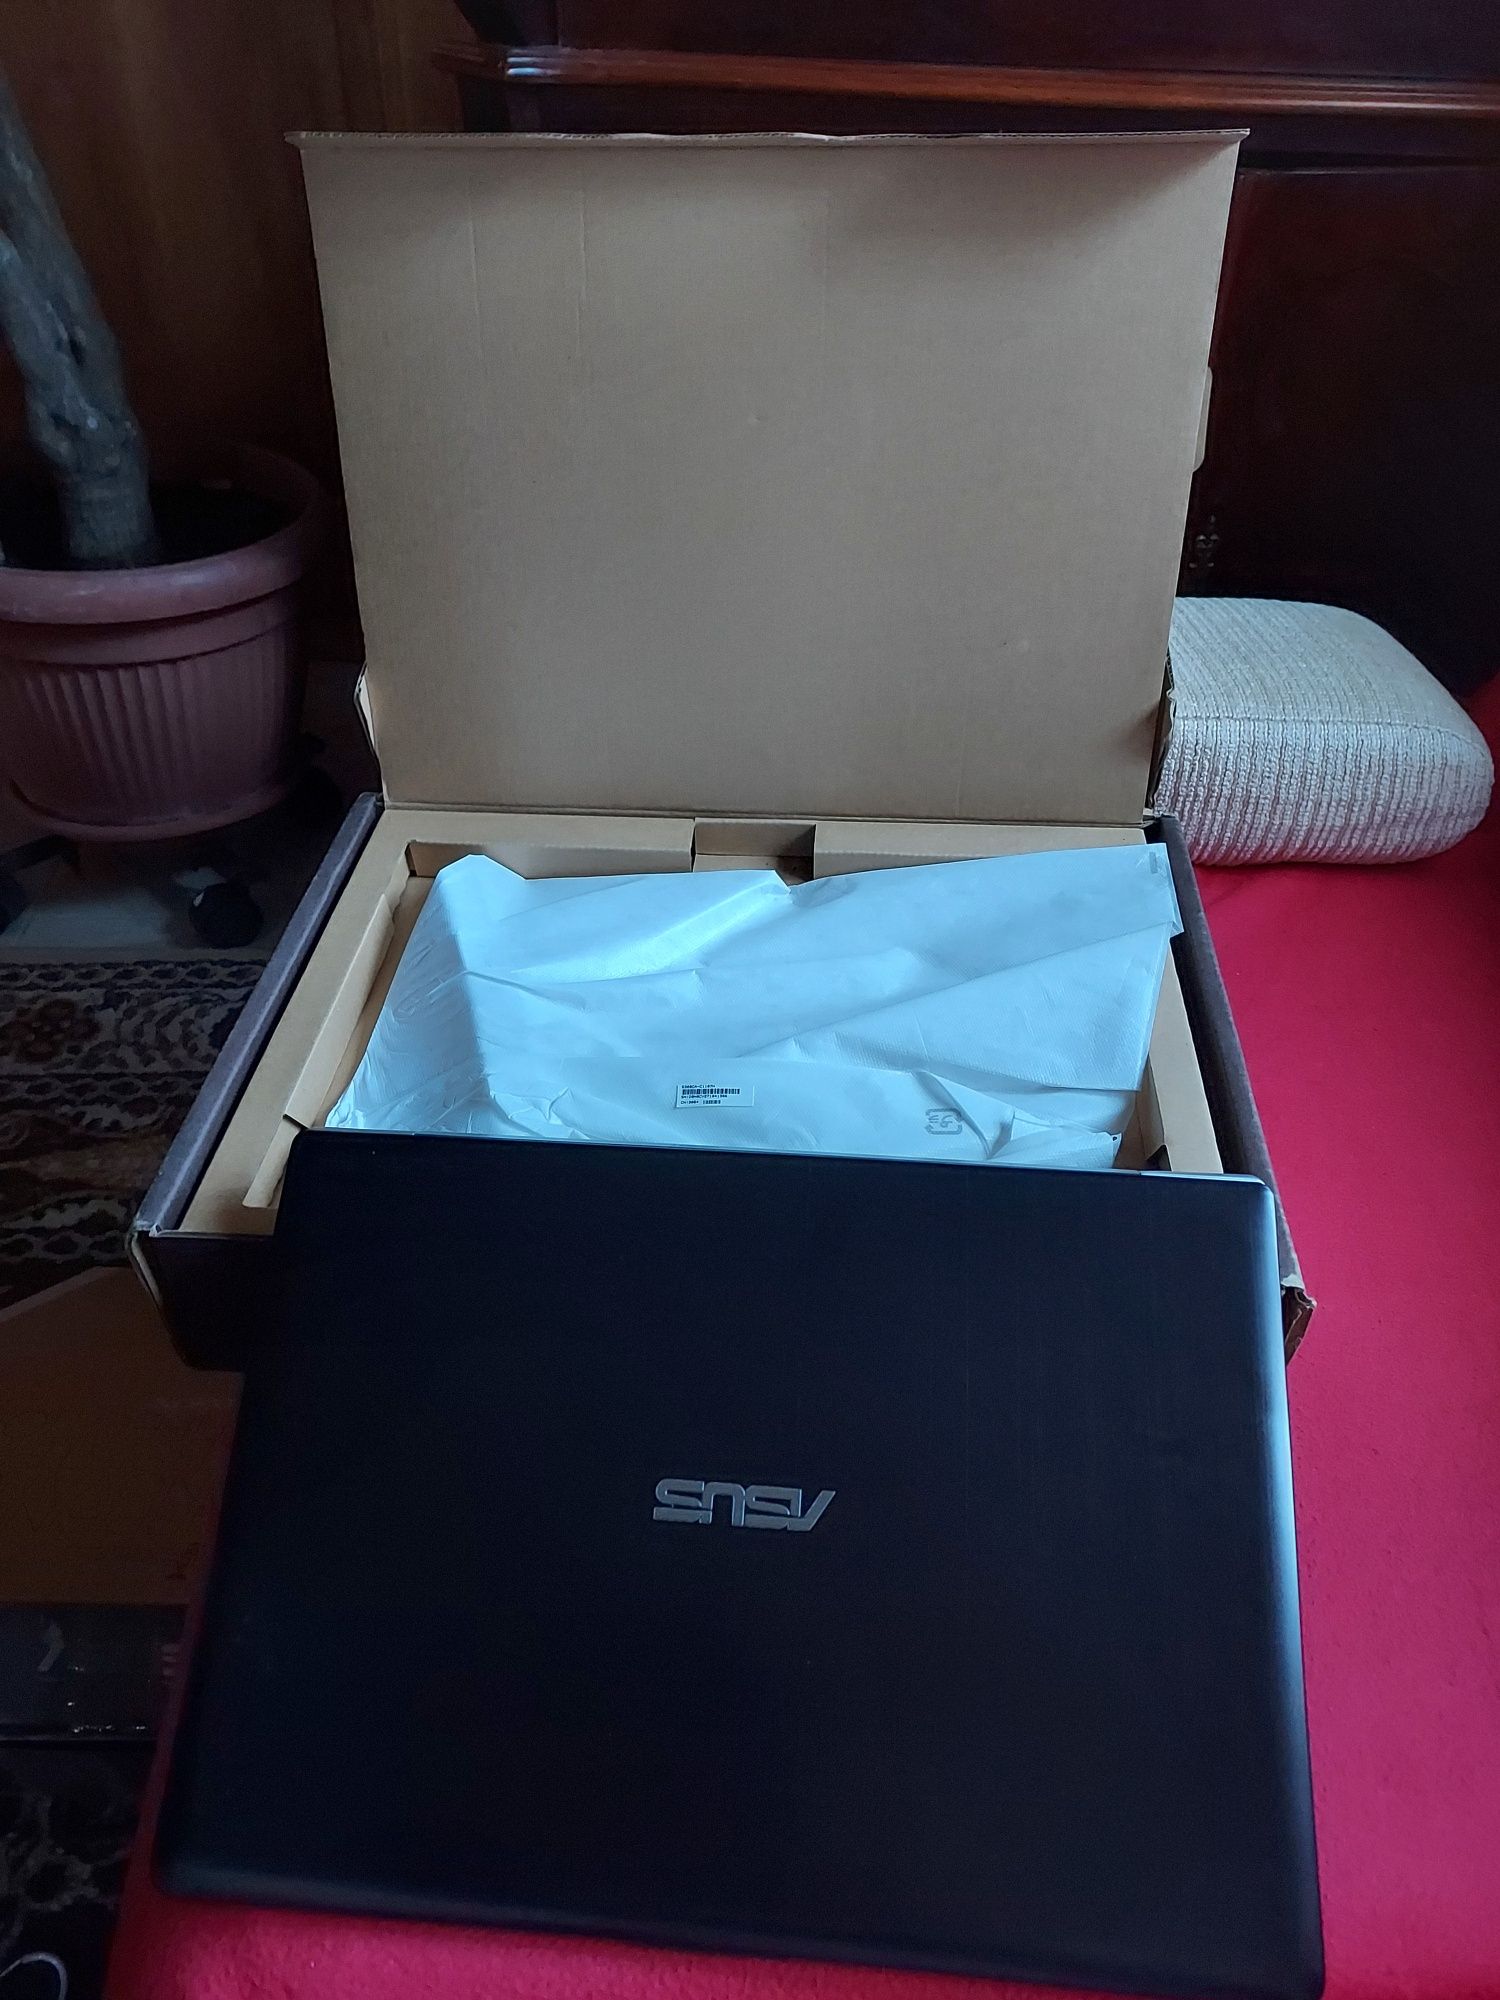 Laptop Asus Vivobook S300c cu touchscreen